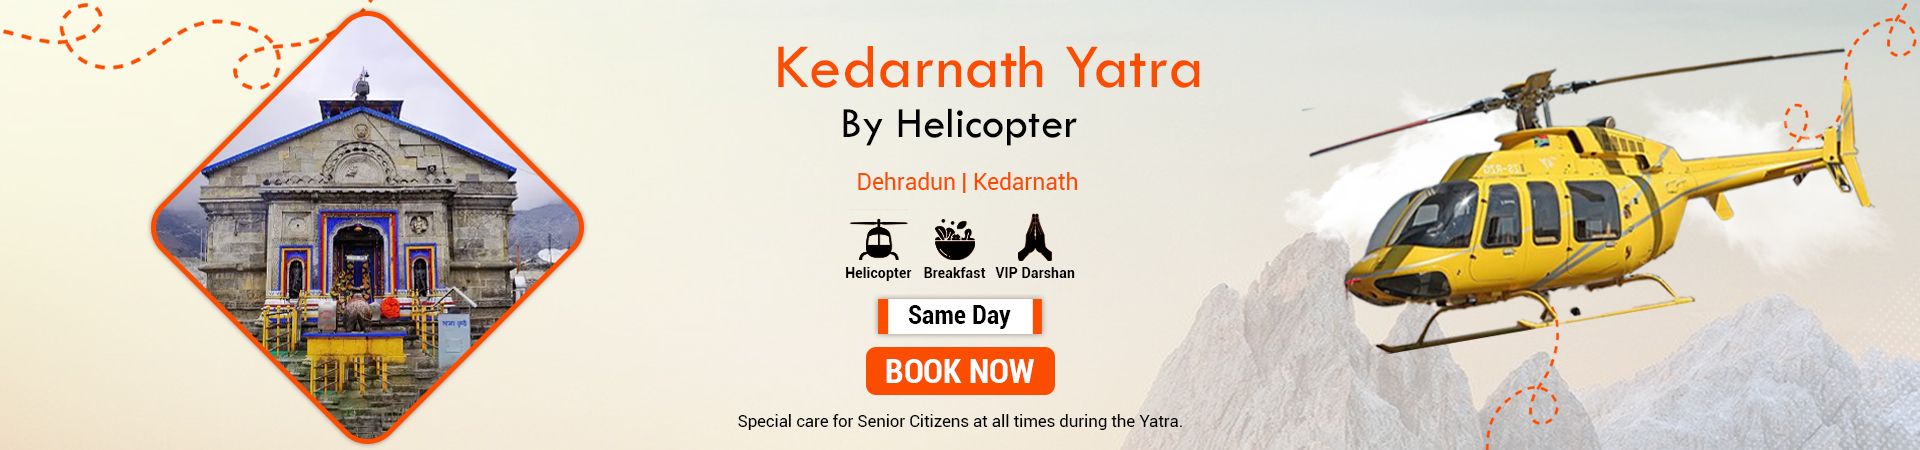 Kedarnath yatra by helicopter